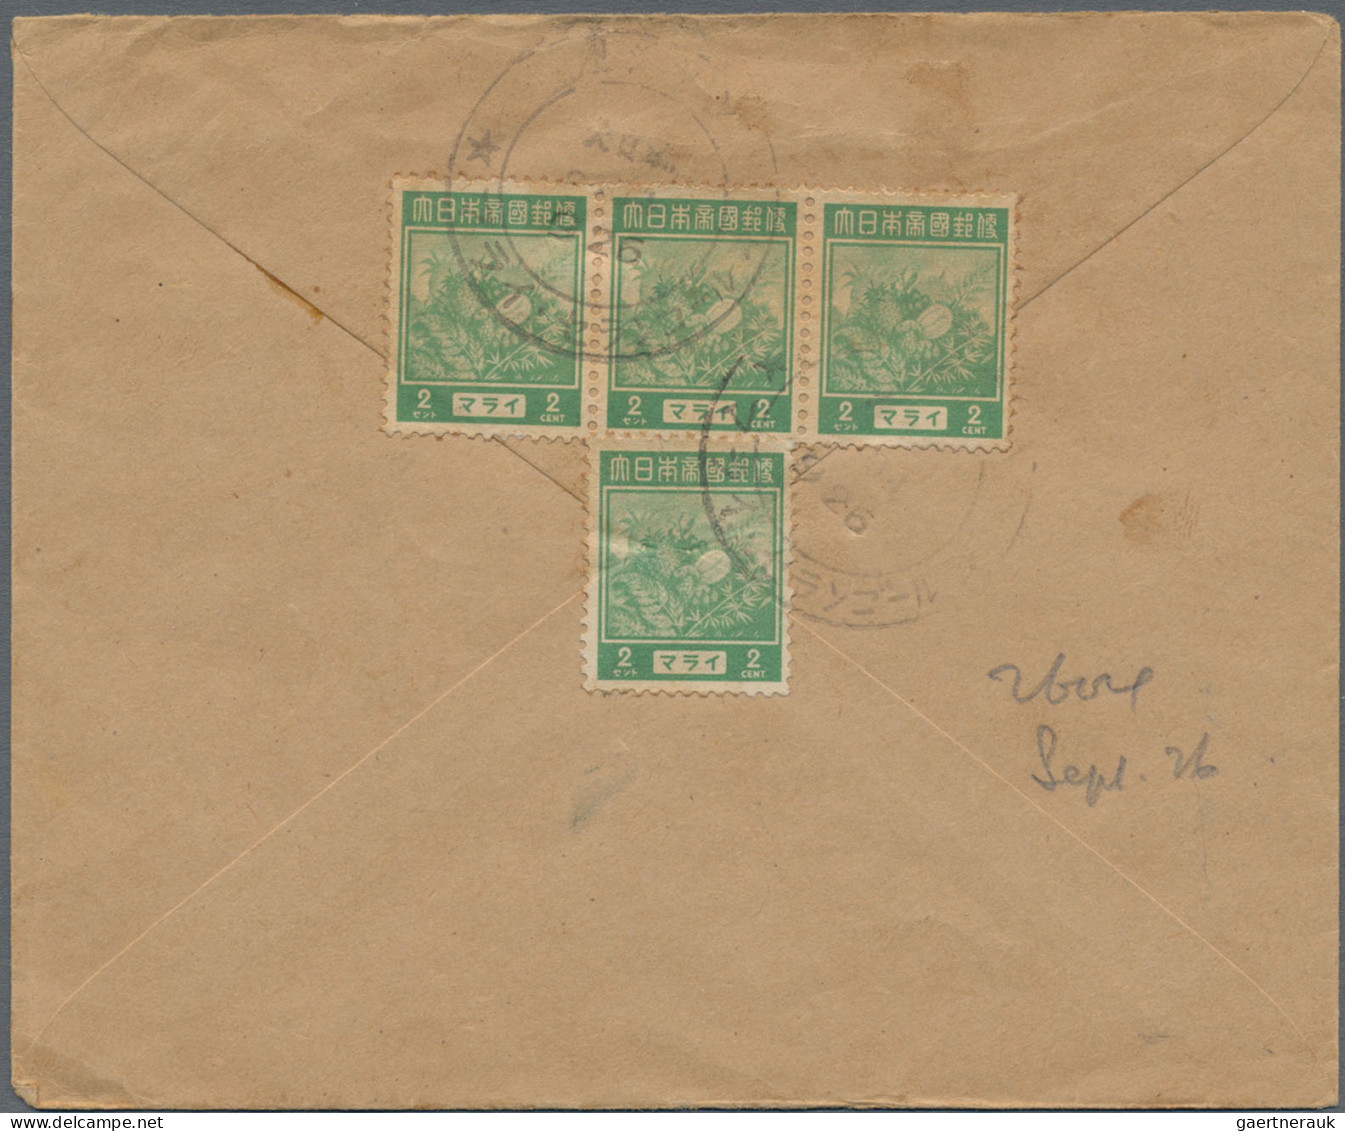 Japanense Occupation of Malaya: 1942/1945, dealer stock of covers, postal statio